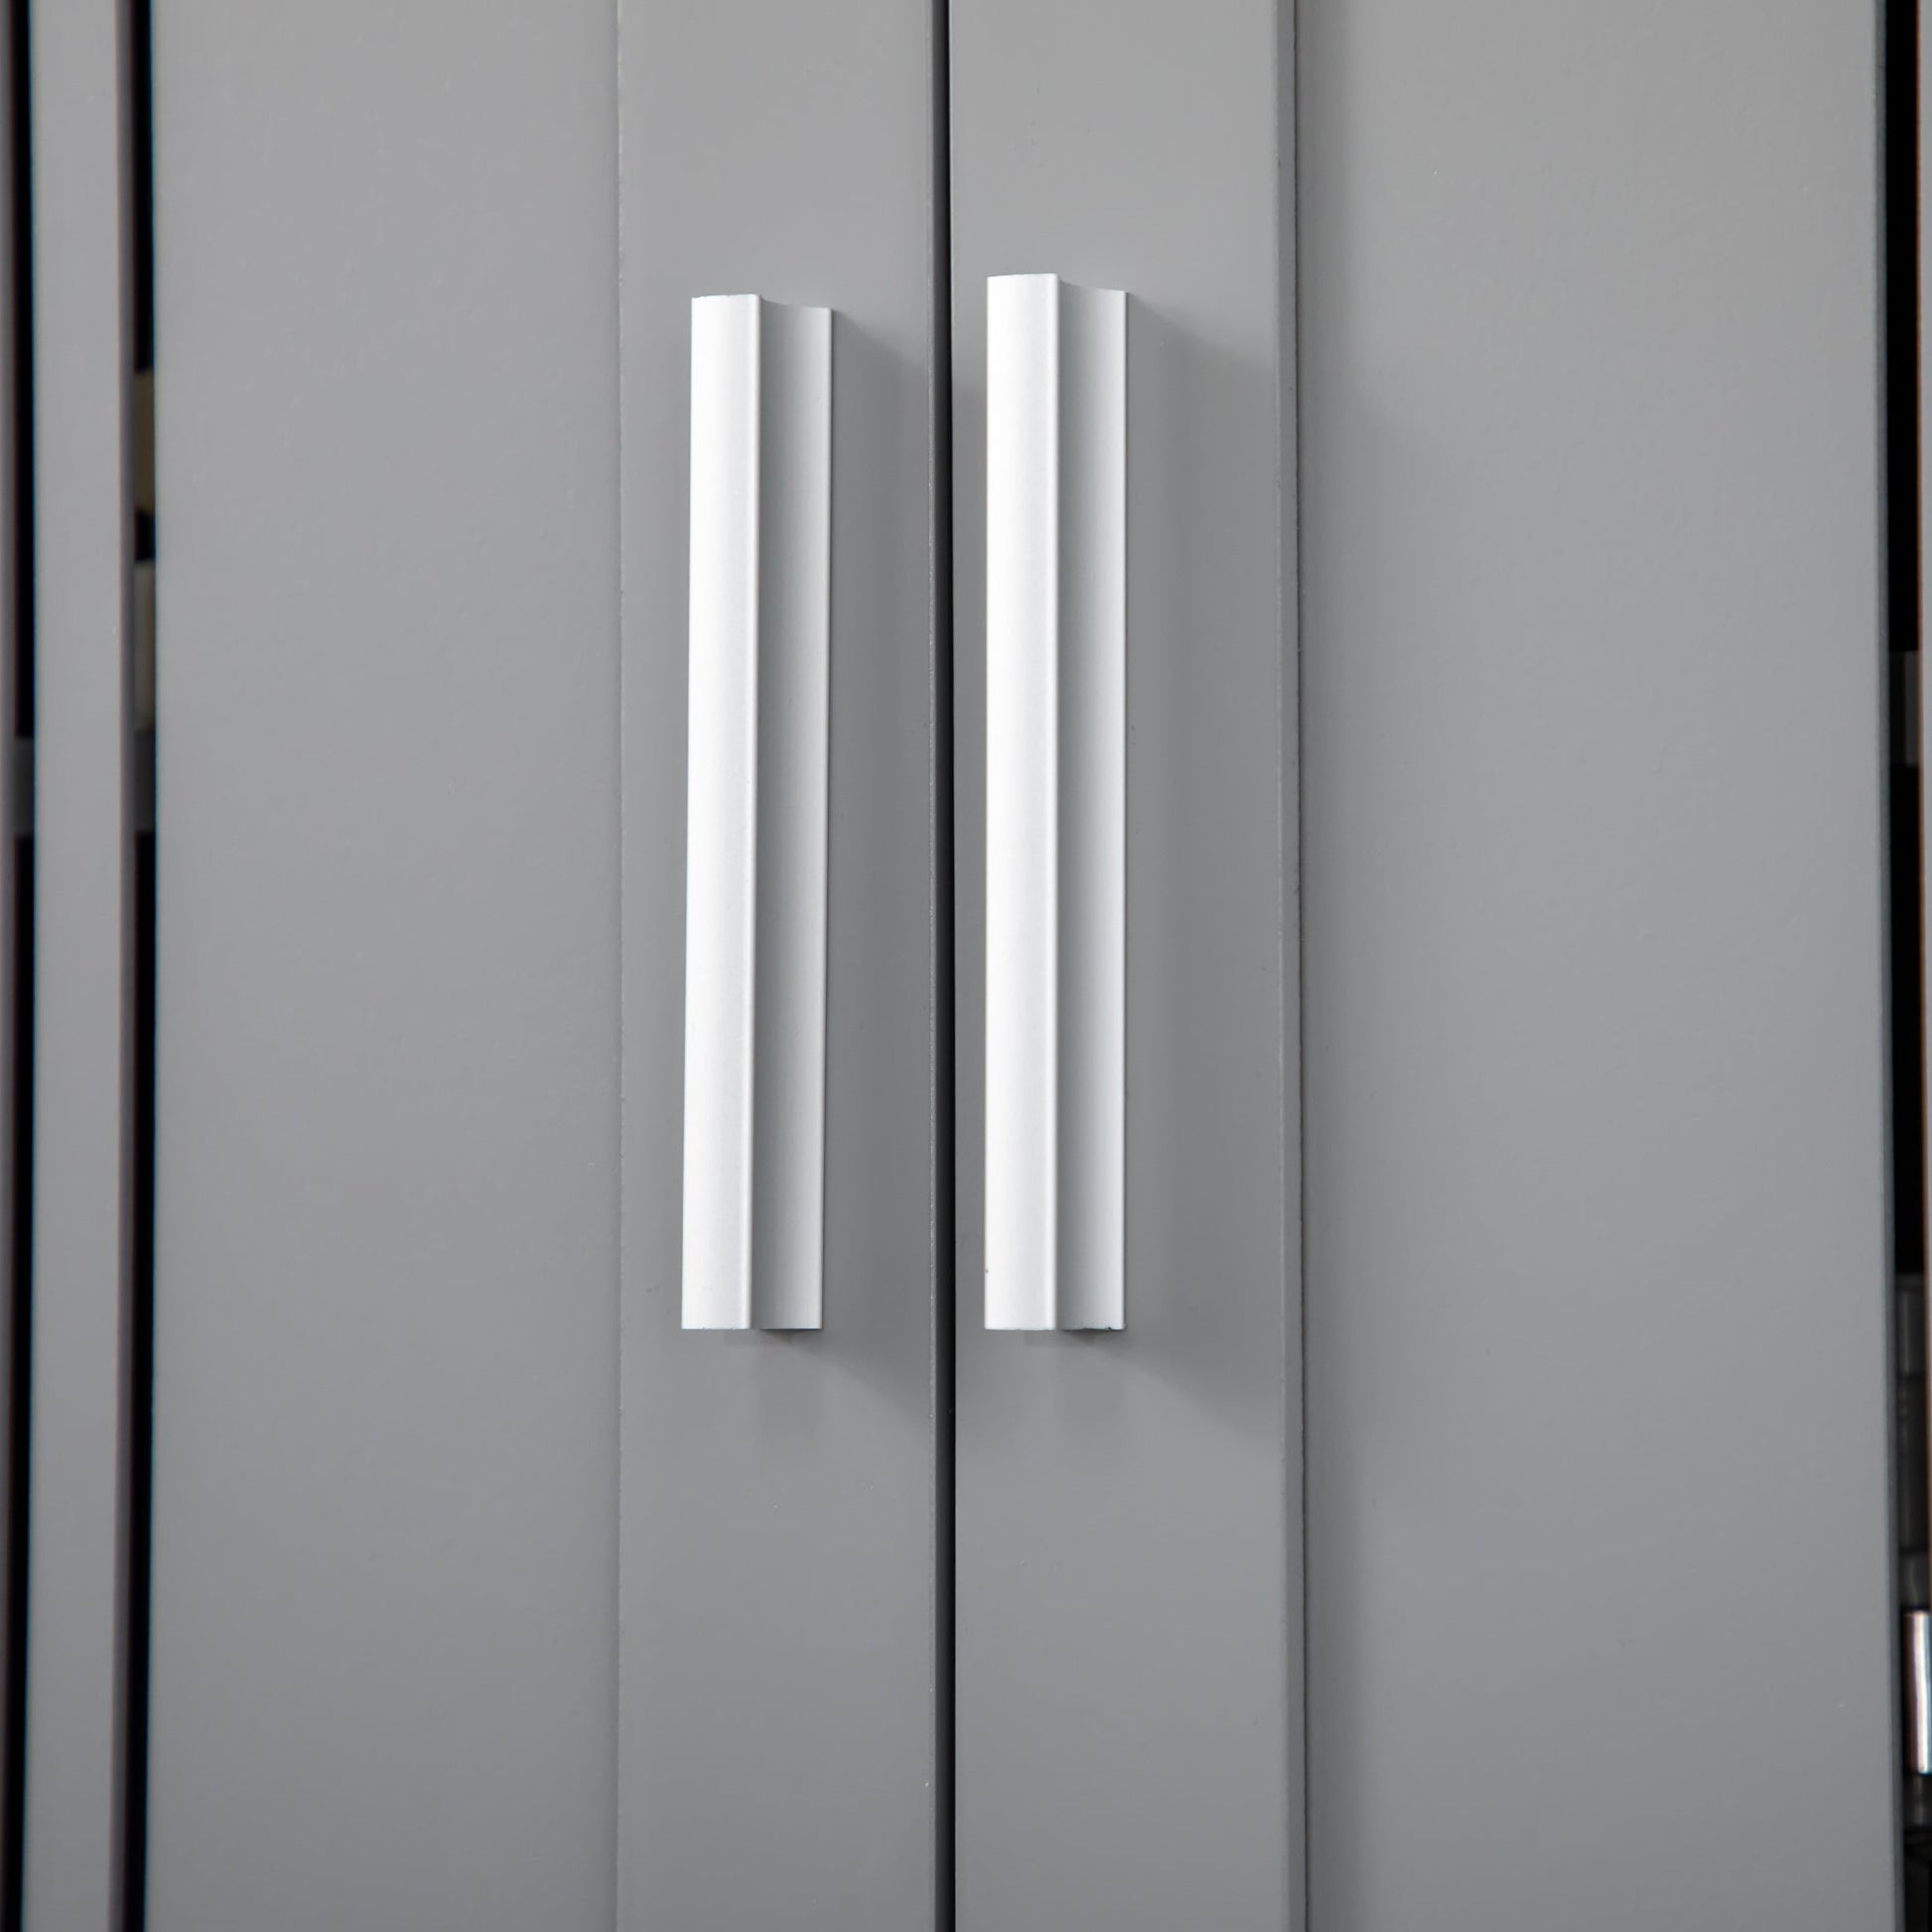 Modern Bathroom Cabinet, Wall Mounted Medicine Cabinet, Storage Organizer with 2 Door Cabinet and Shelf, Grey - Gallery Canada